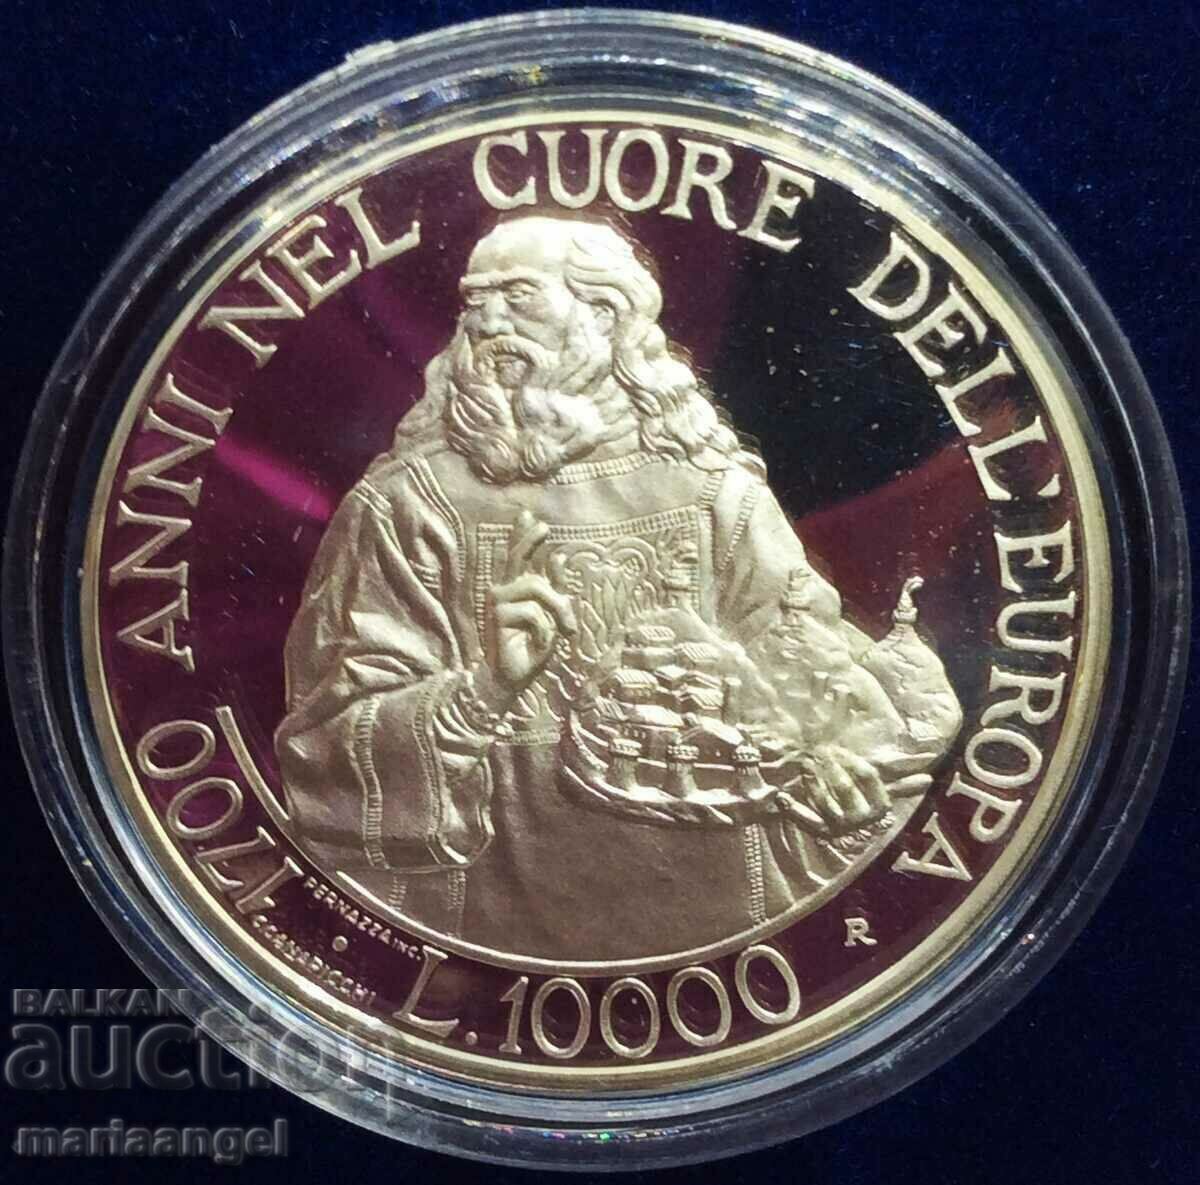 San Marino 10000 lire 2000 jubileul 1700 al republicii